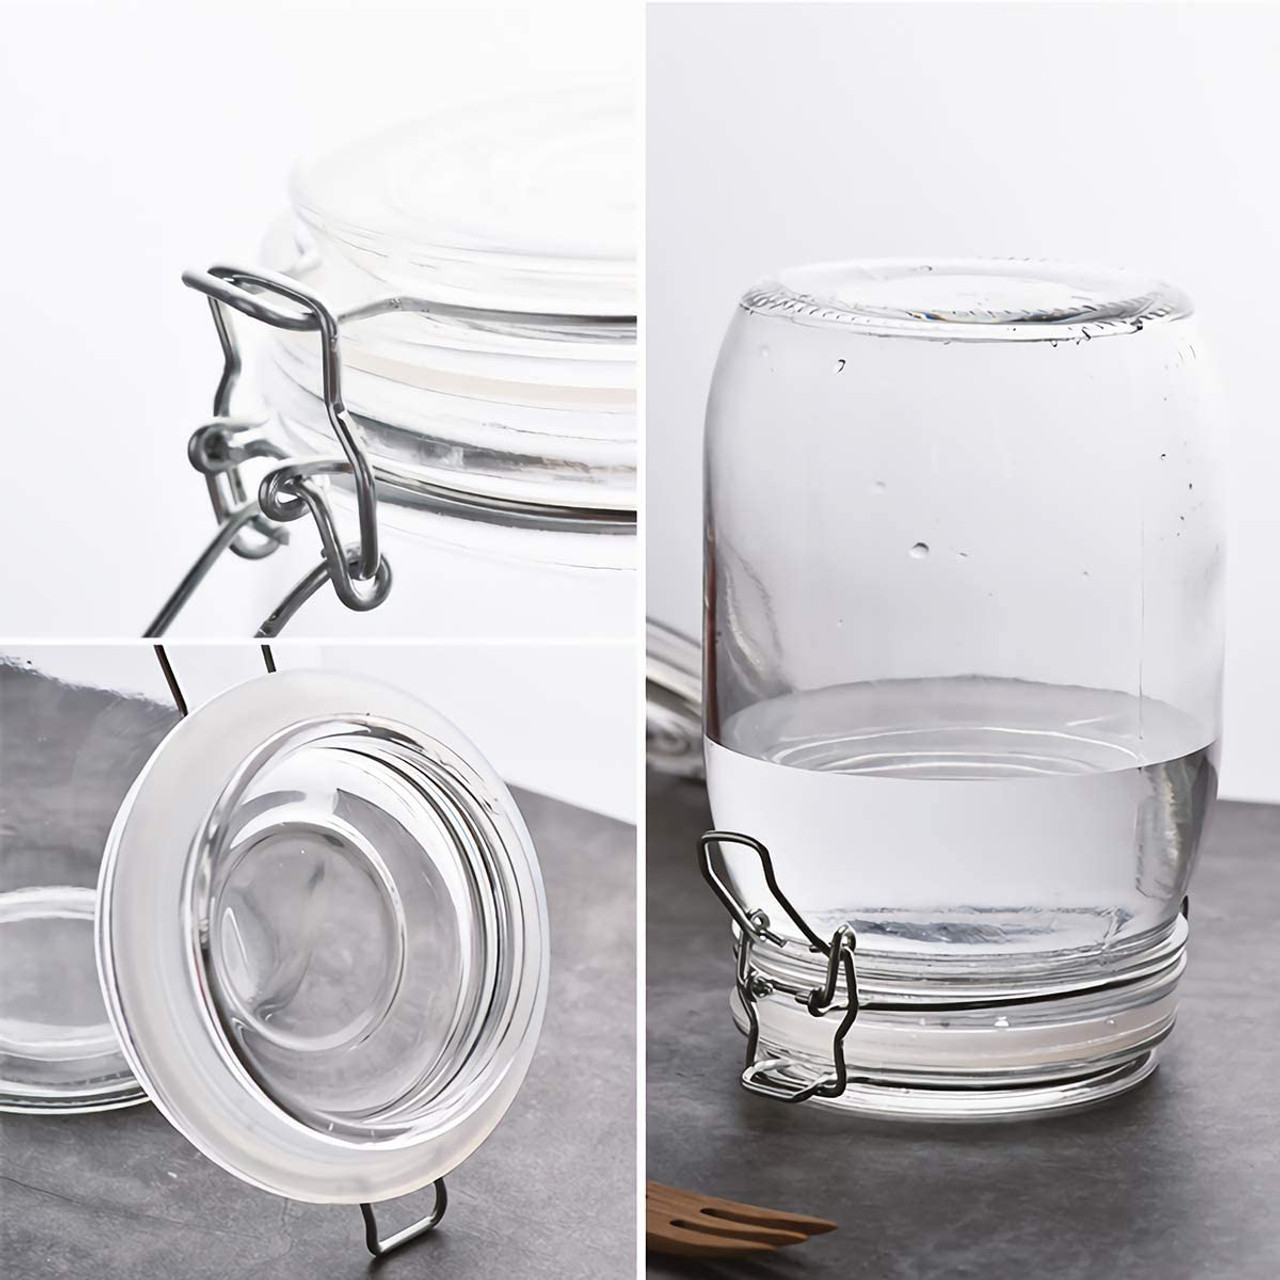 50oz Airtight Glass Jars with Lids, CHEFSTORY 3 PCS Food Storage